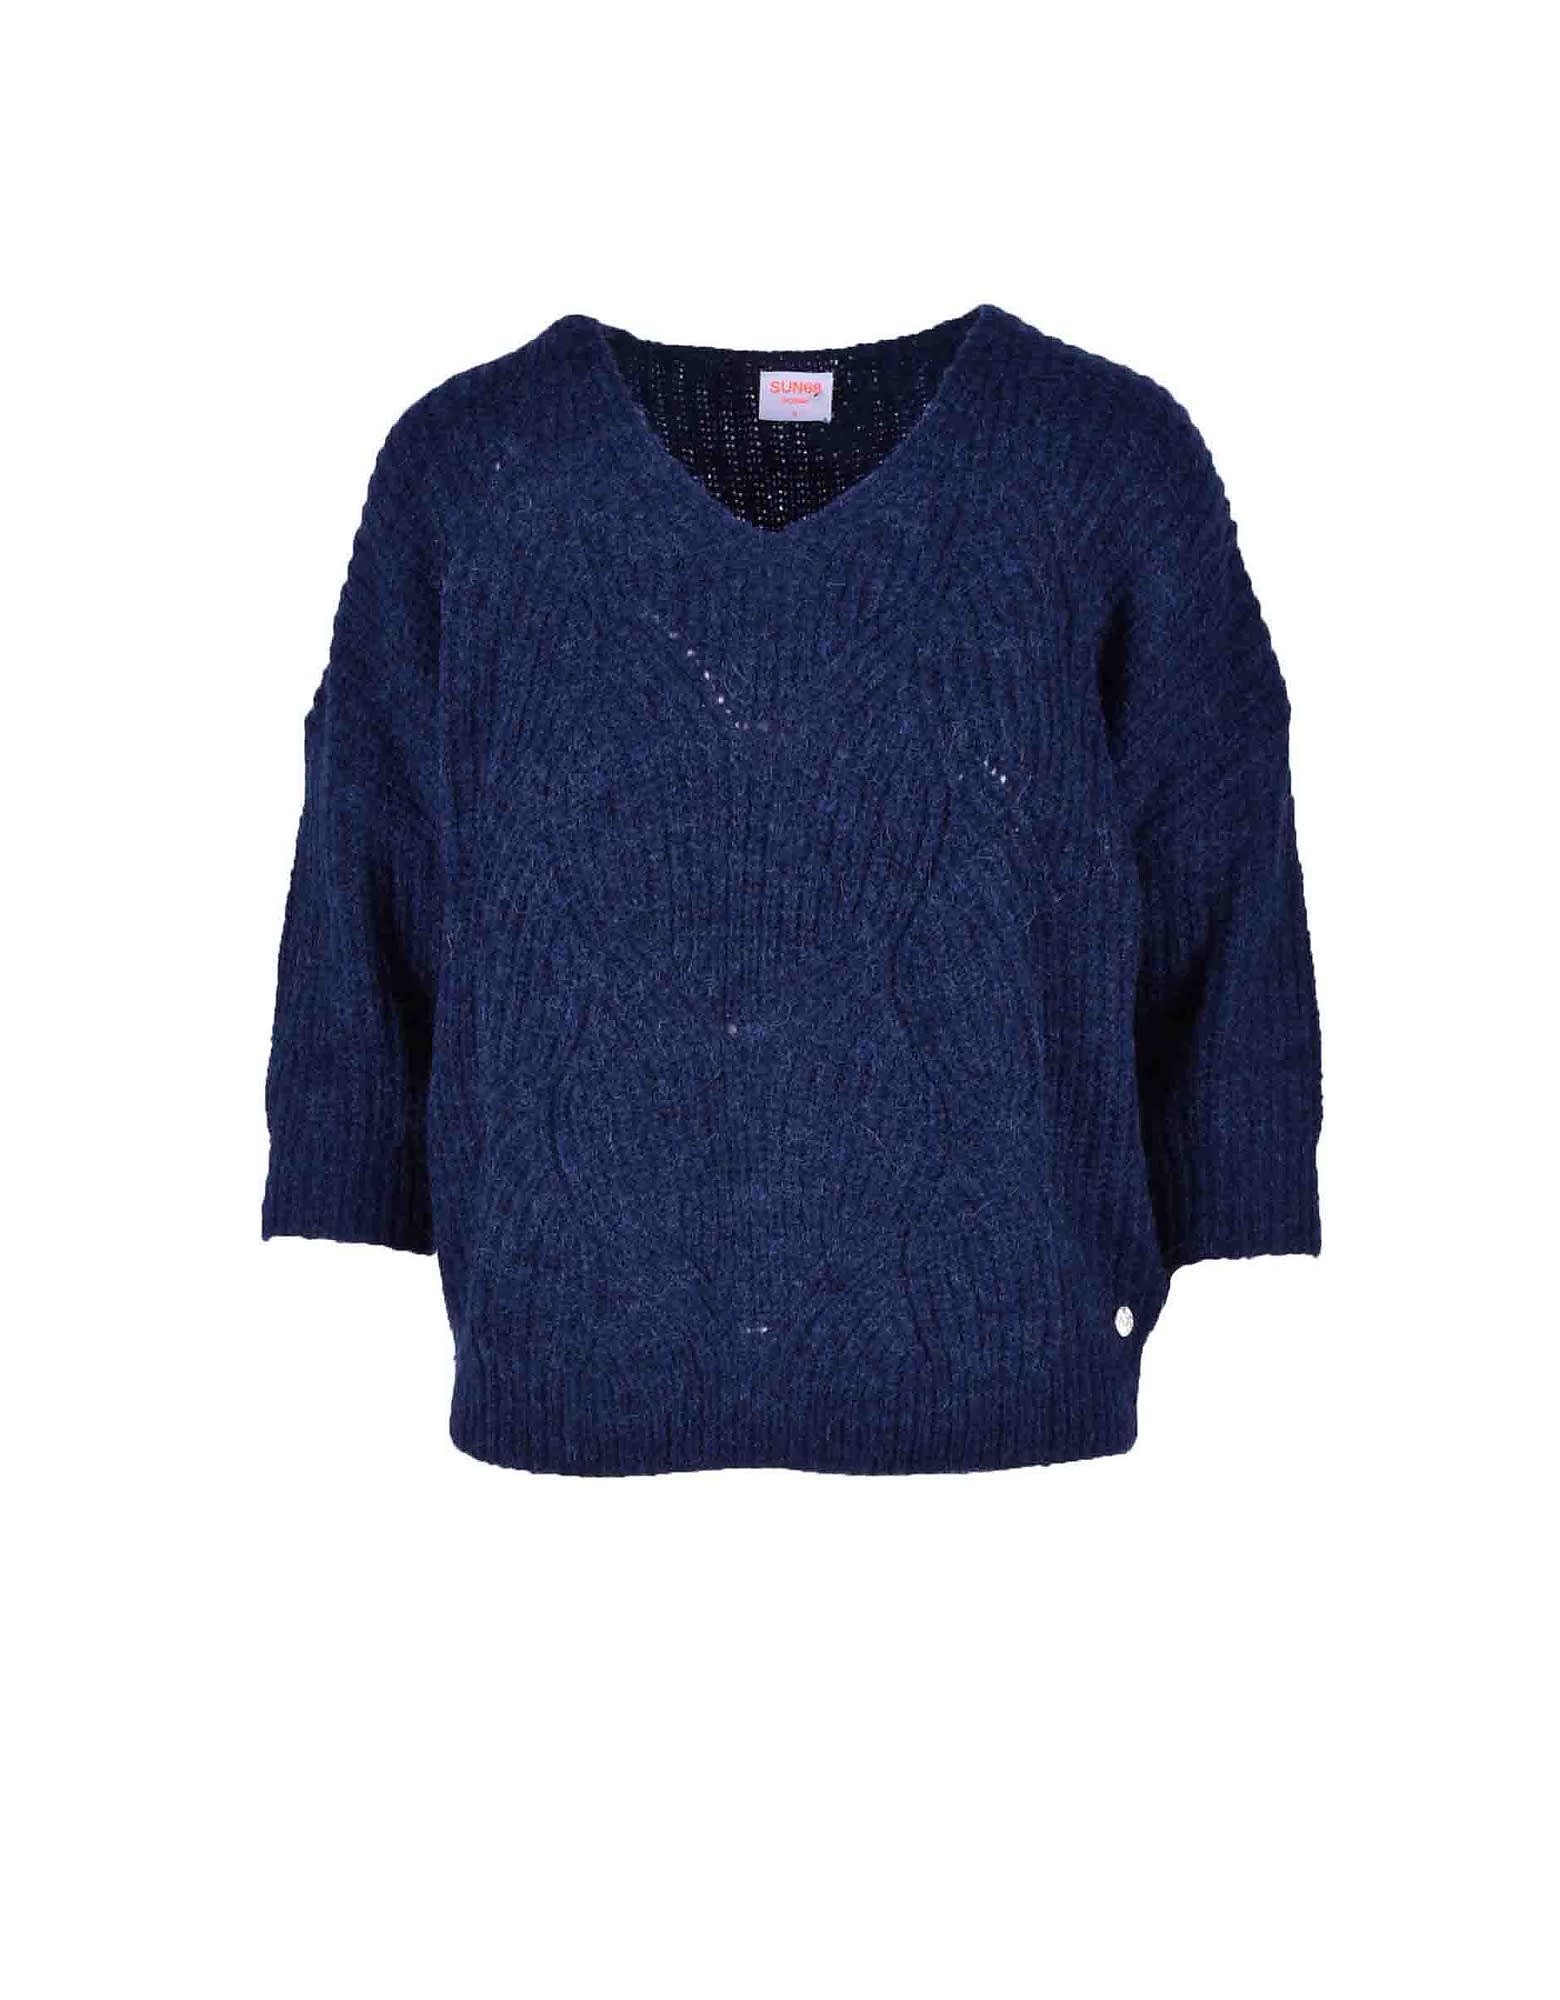 Sun 68 Womens Blue Sweater